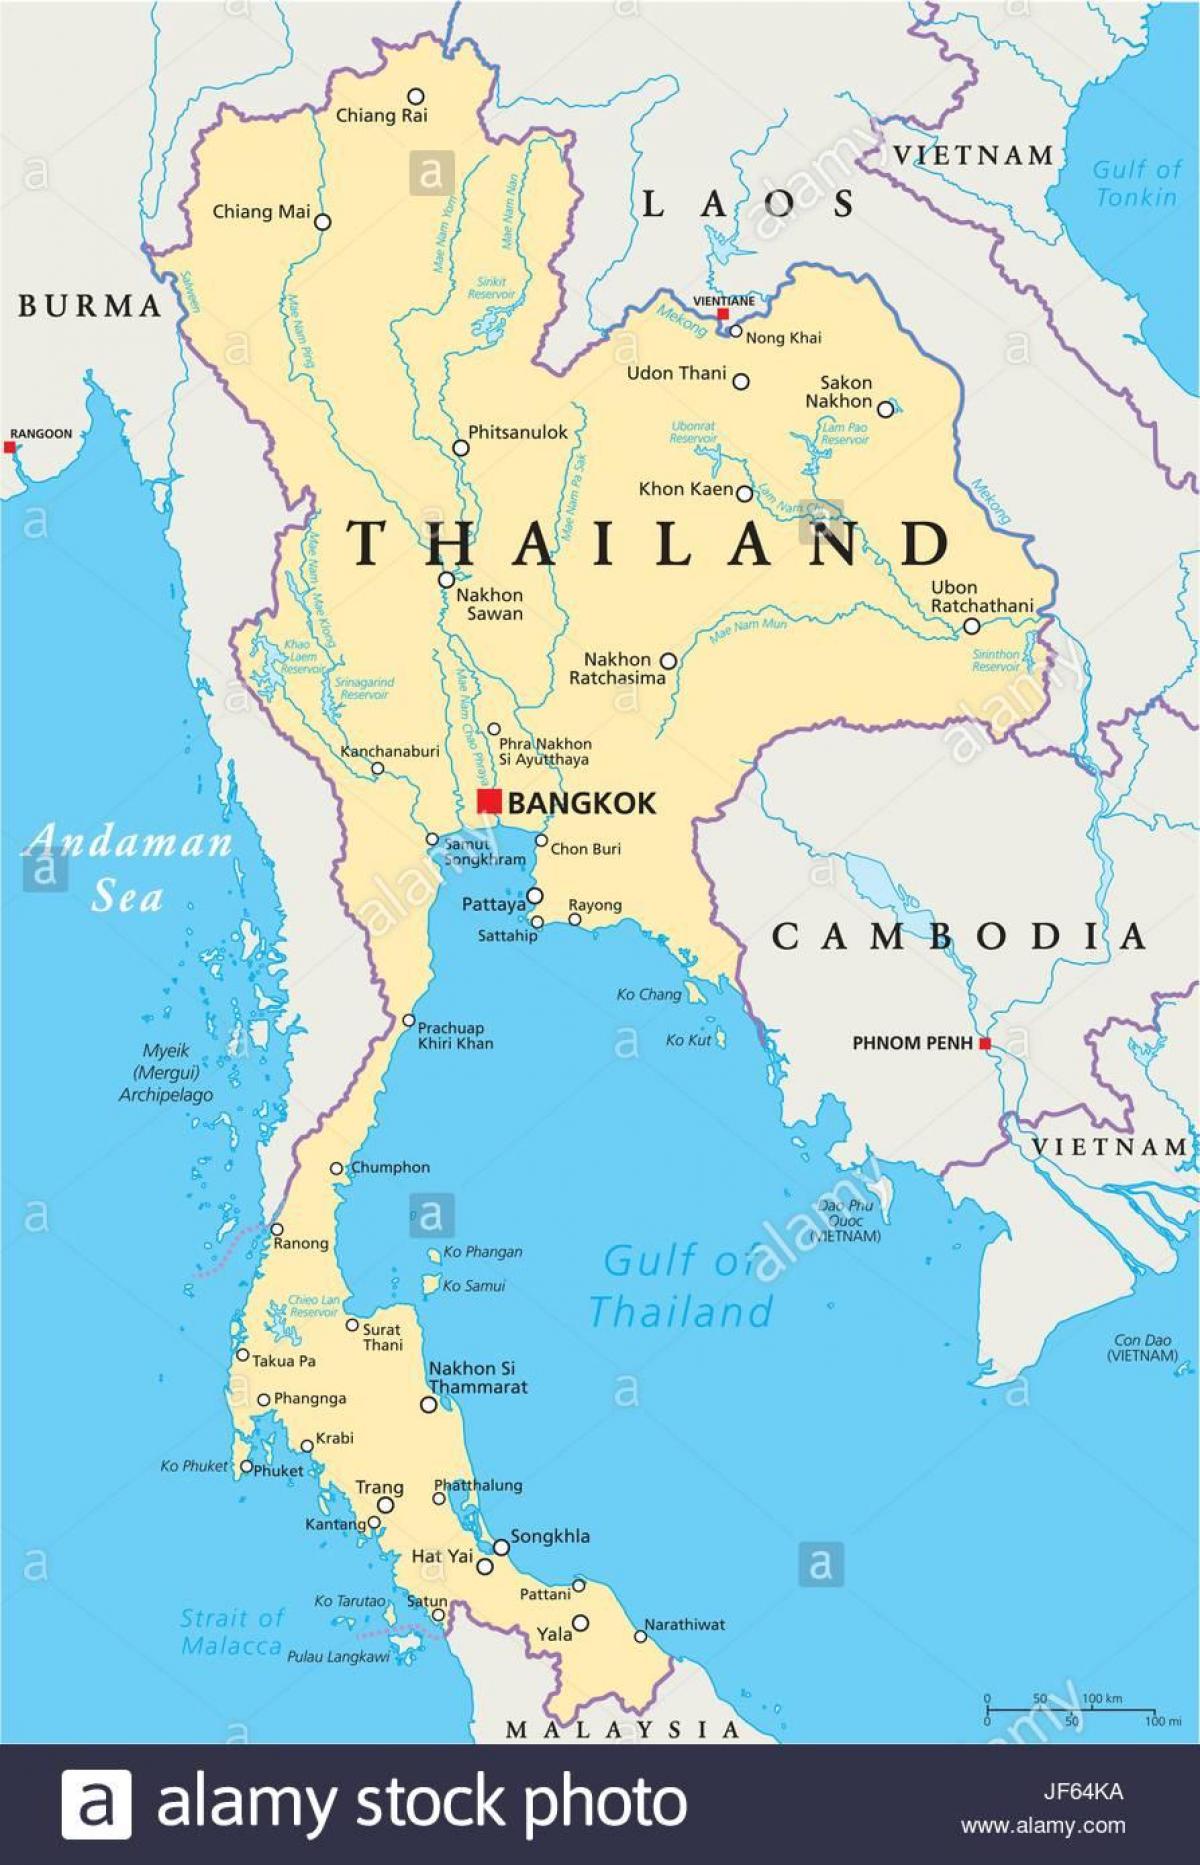 bangkok, thailand peta dunia